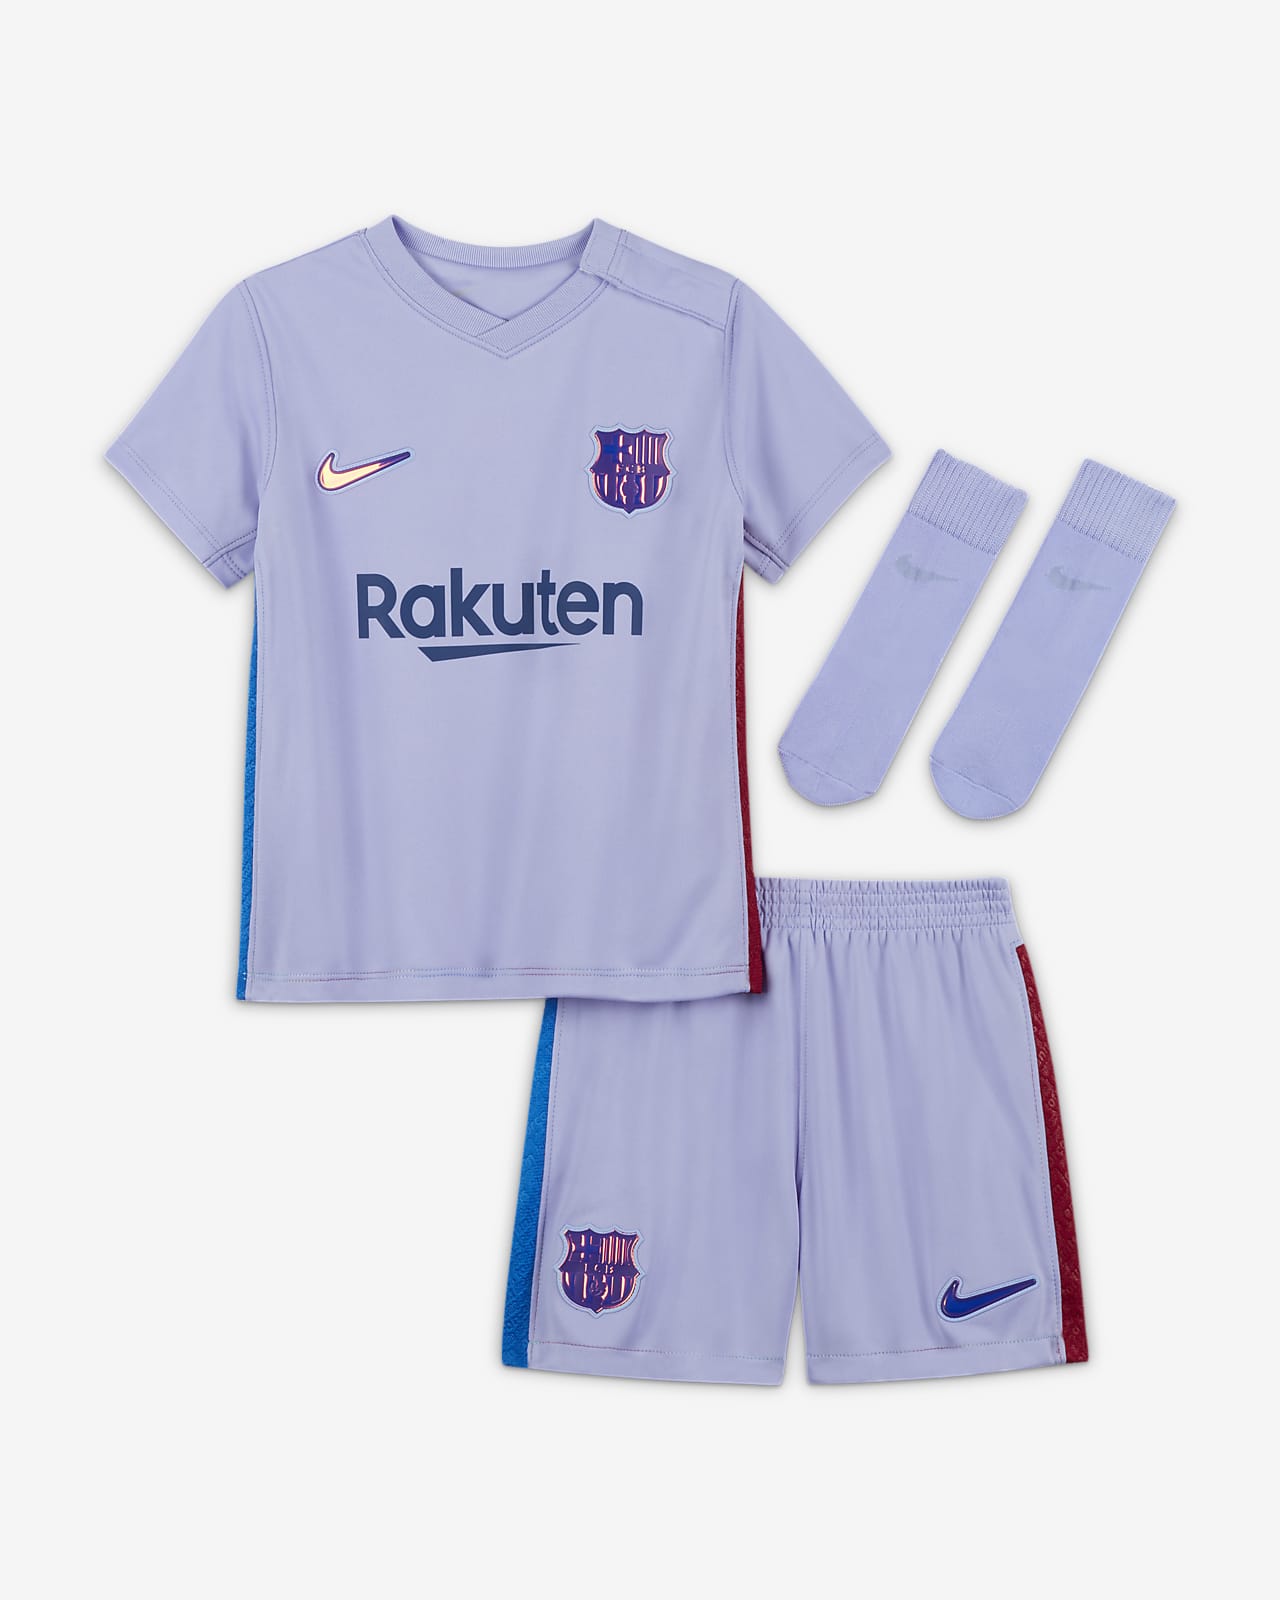 barcelona kit